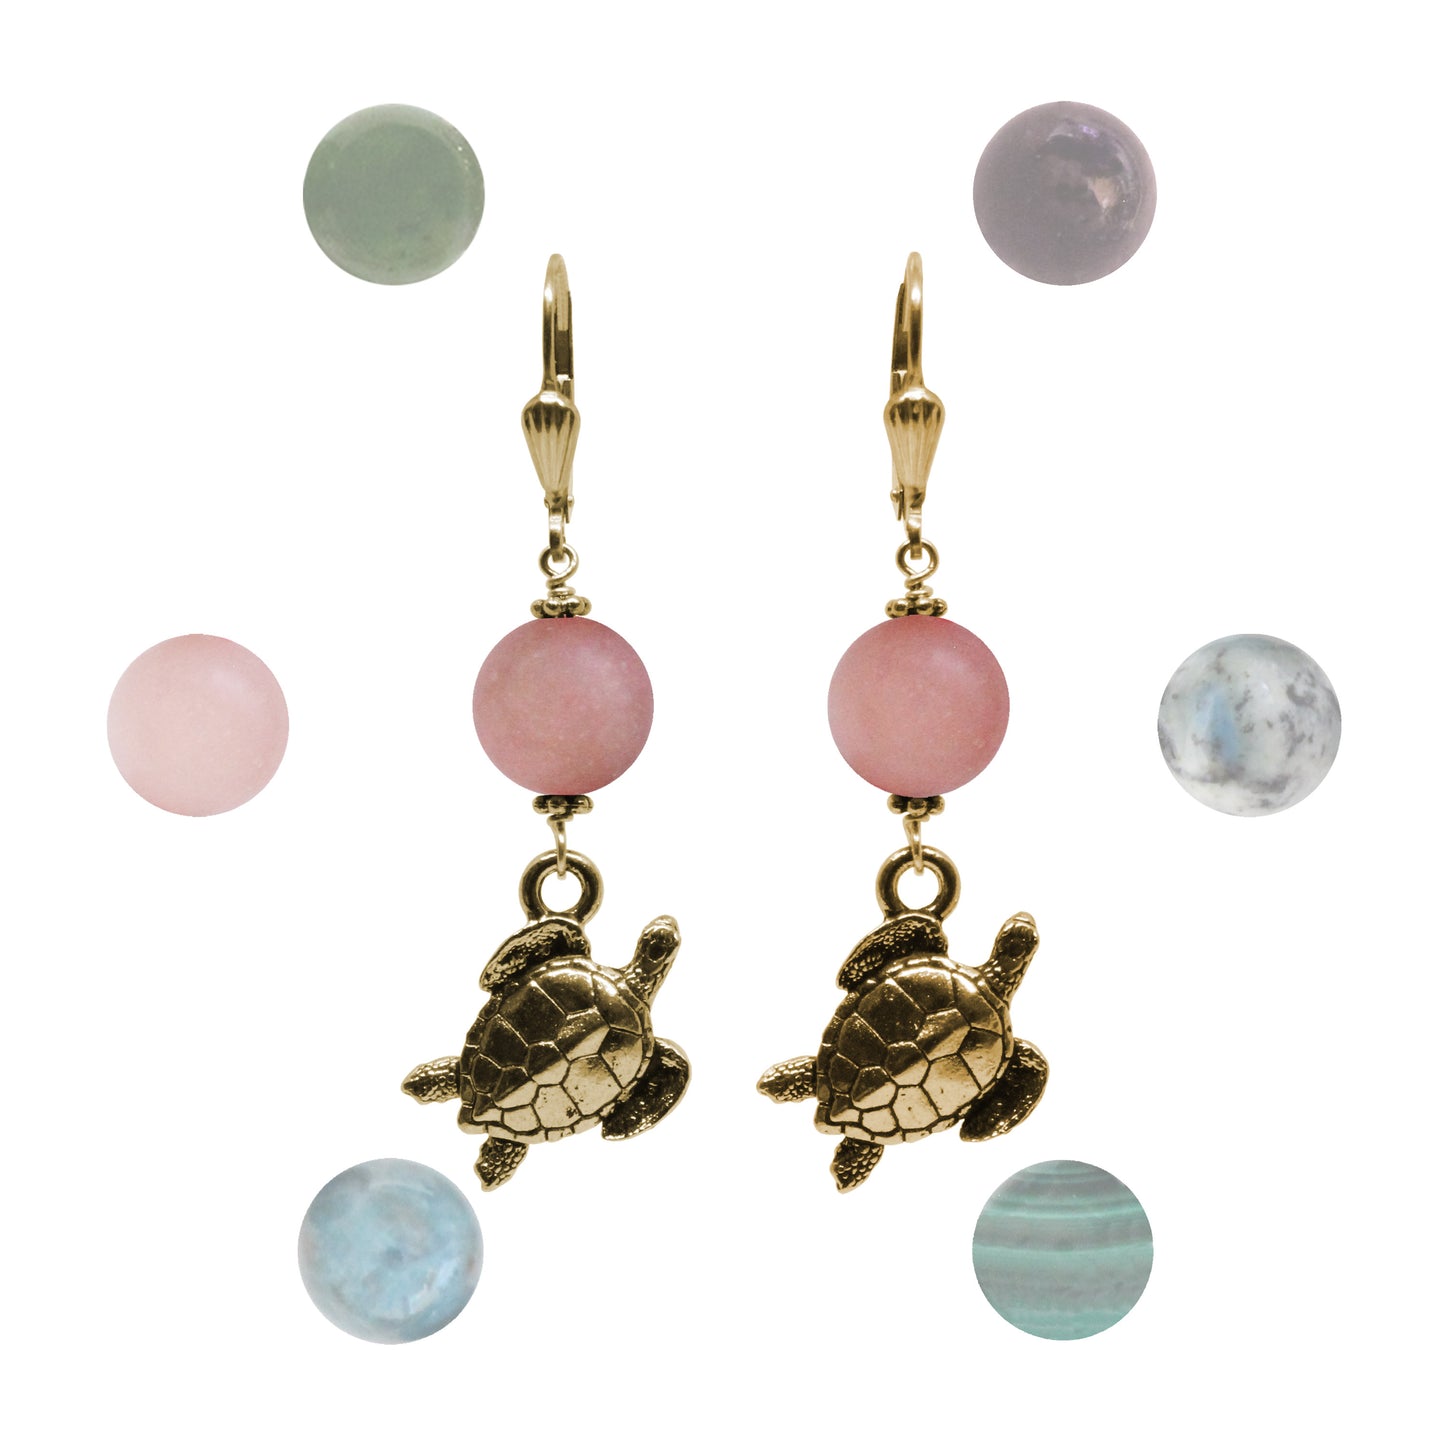 Sea Turtle Earrings / 53mm length / gold filled shell leverbacks / choose from K2 granite, BC jade, blue apatite, garnet, malachite, pink opal